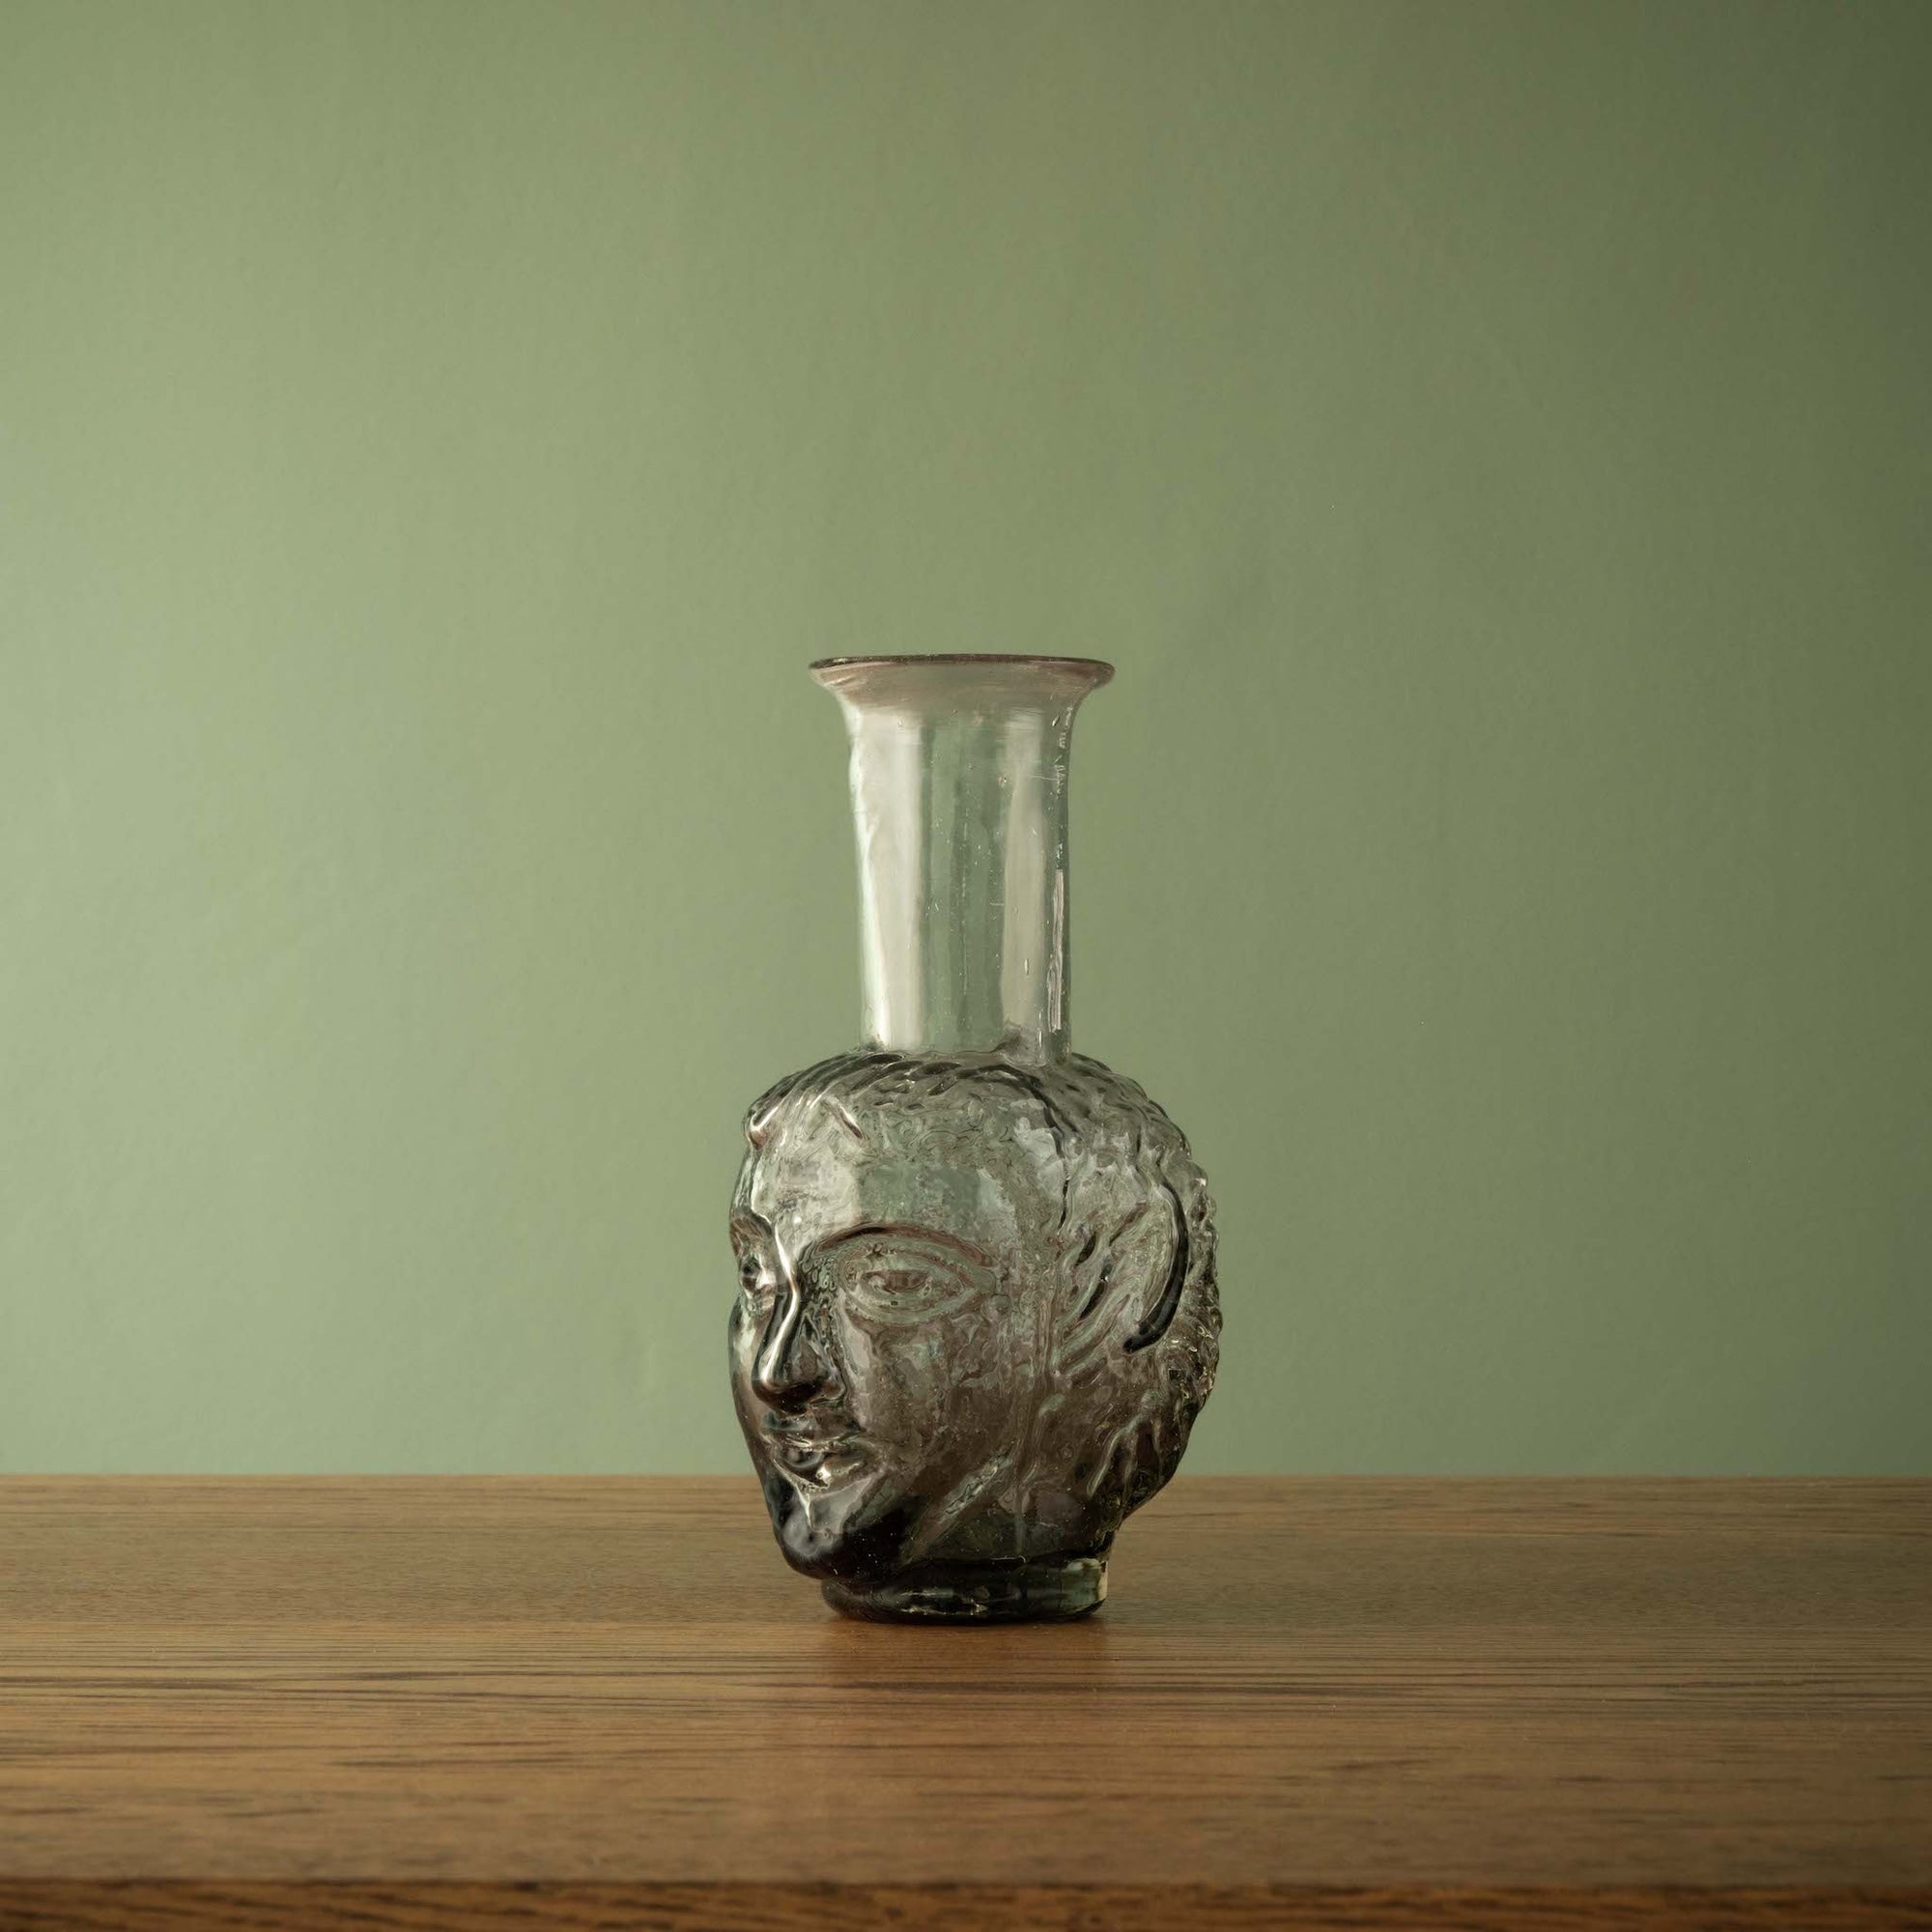 La Soufflerie Vase Tete in Smoke Recycled Glass